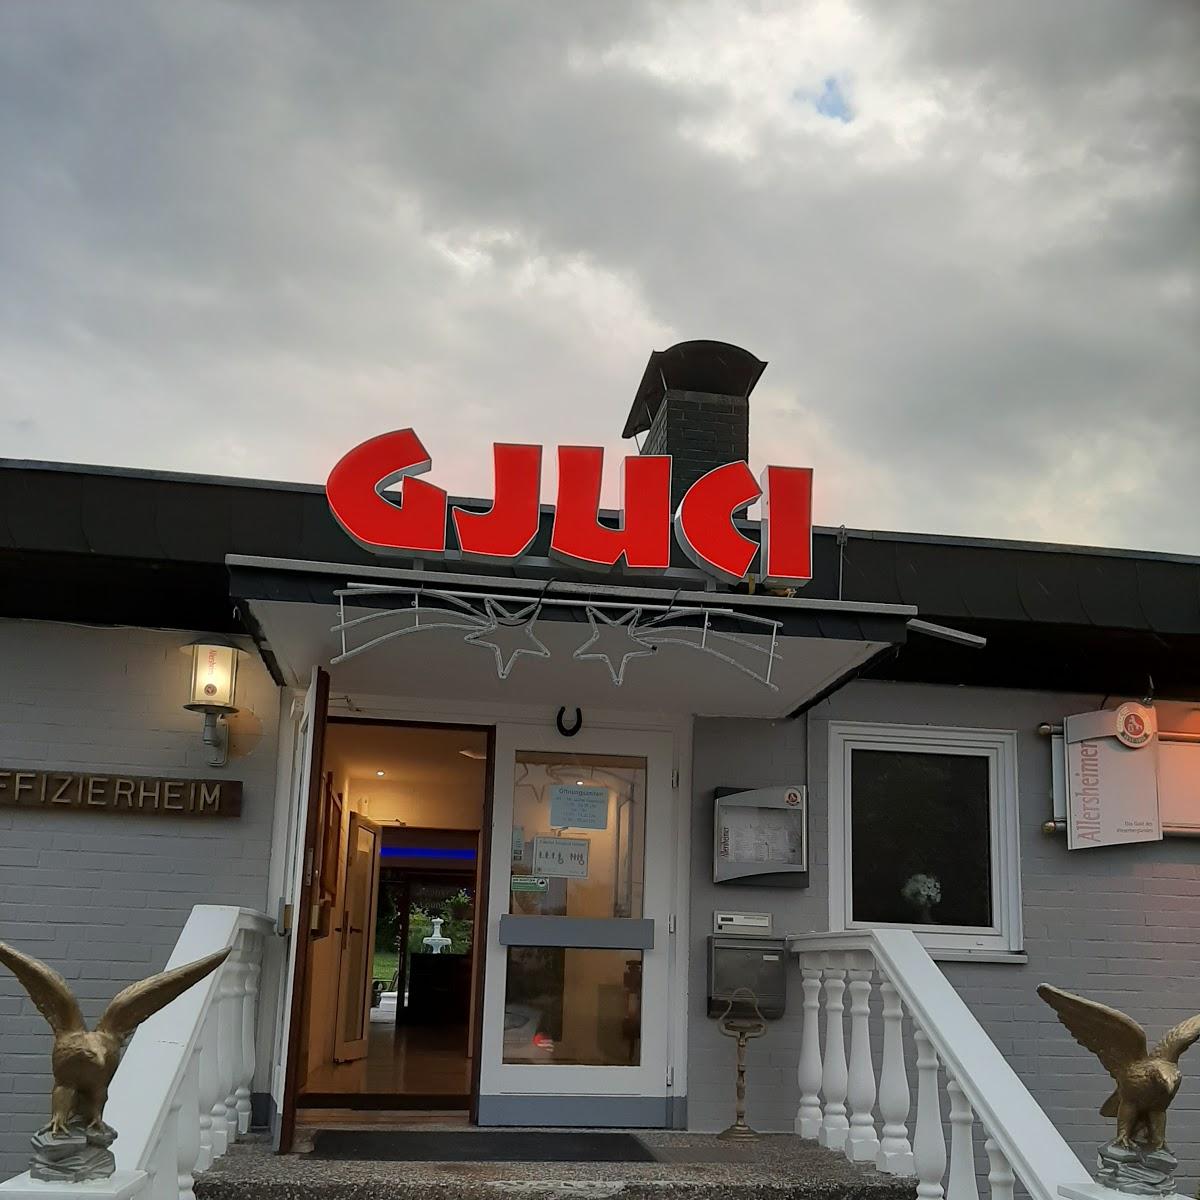 Restaurant "Restaurant Gjuci" in  Stadtoldendorf